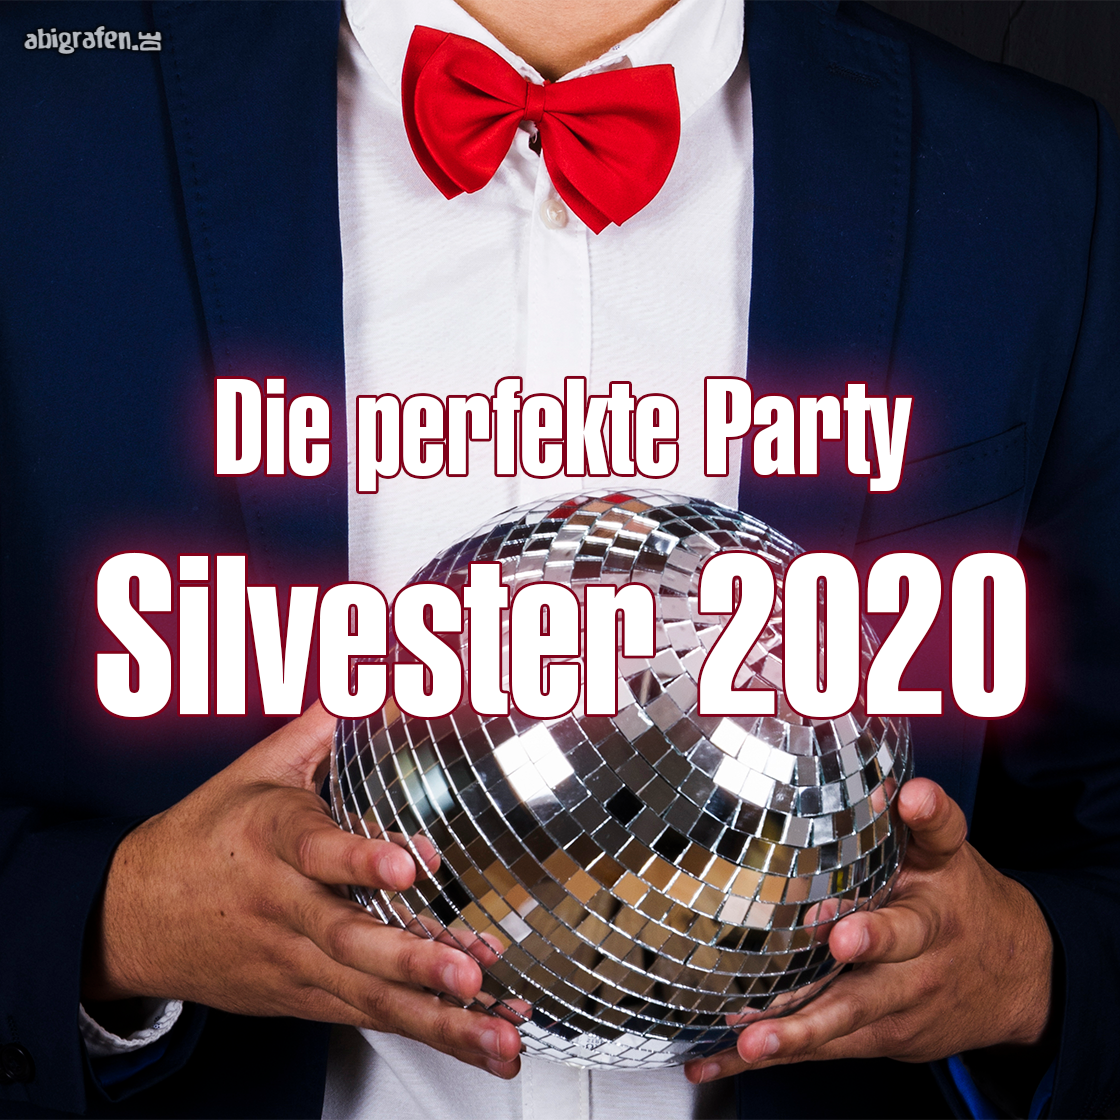 Silvester 2020: Die perfekte Party